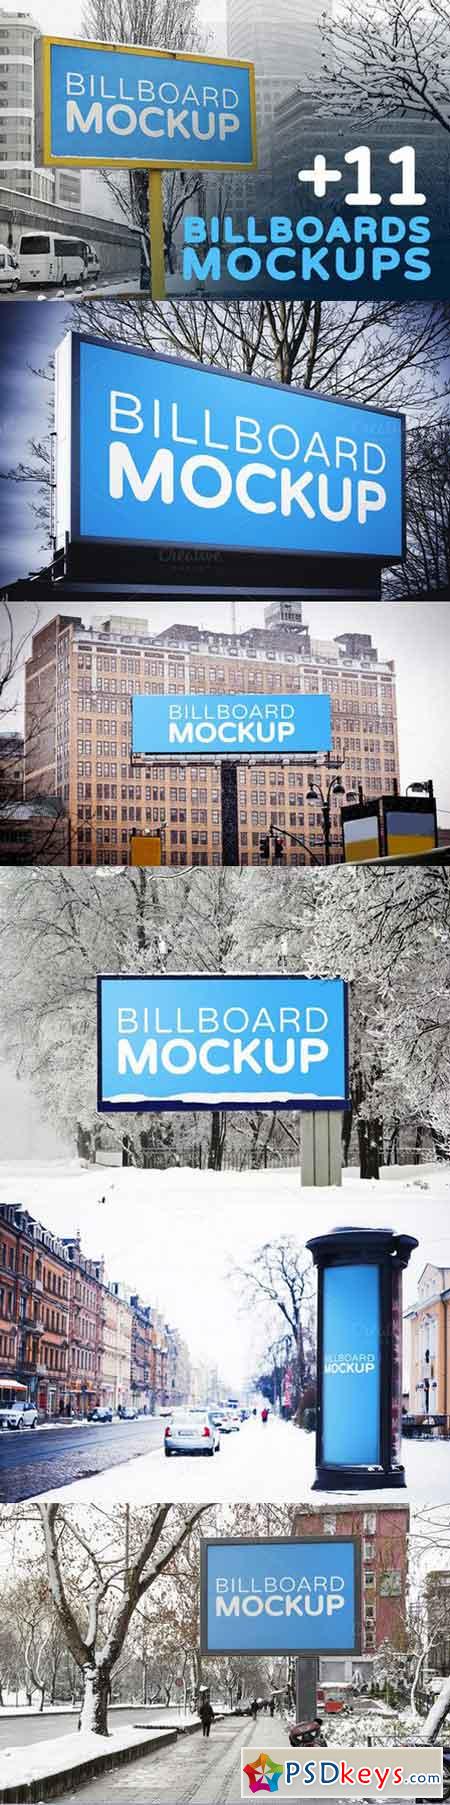 Billboards Mockups in Winter 1035516